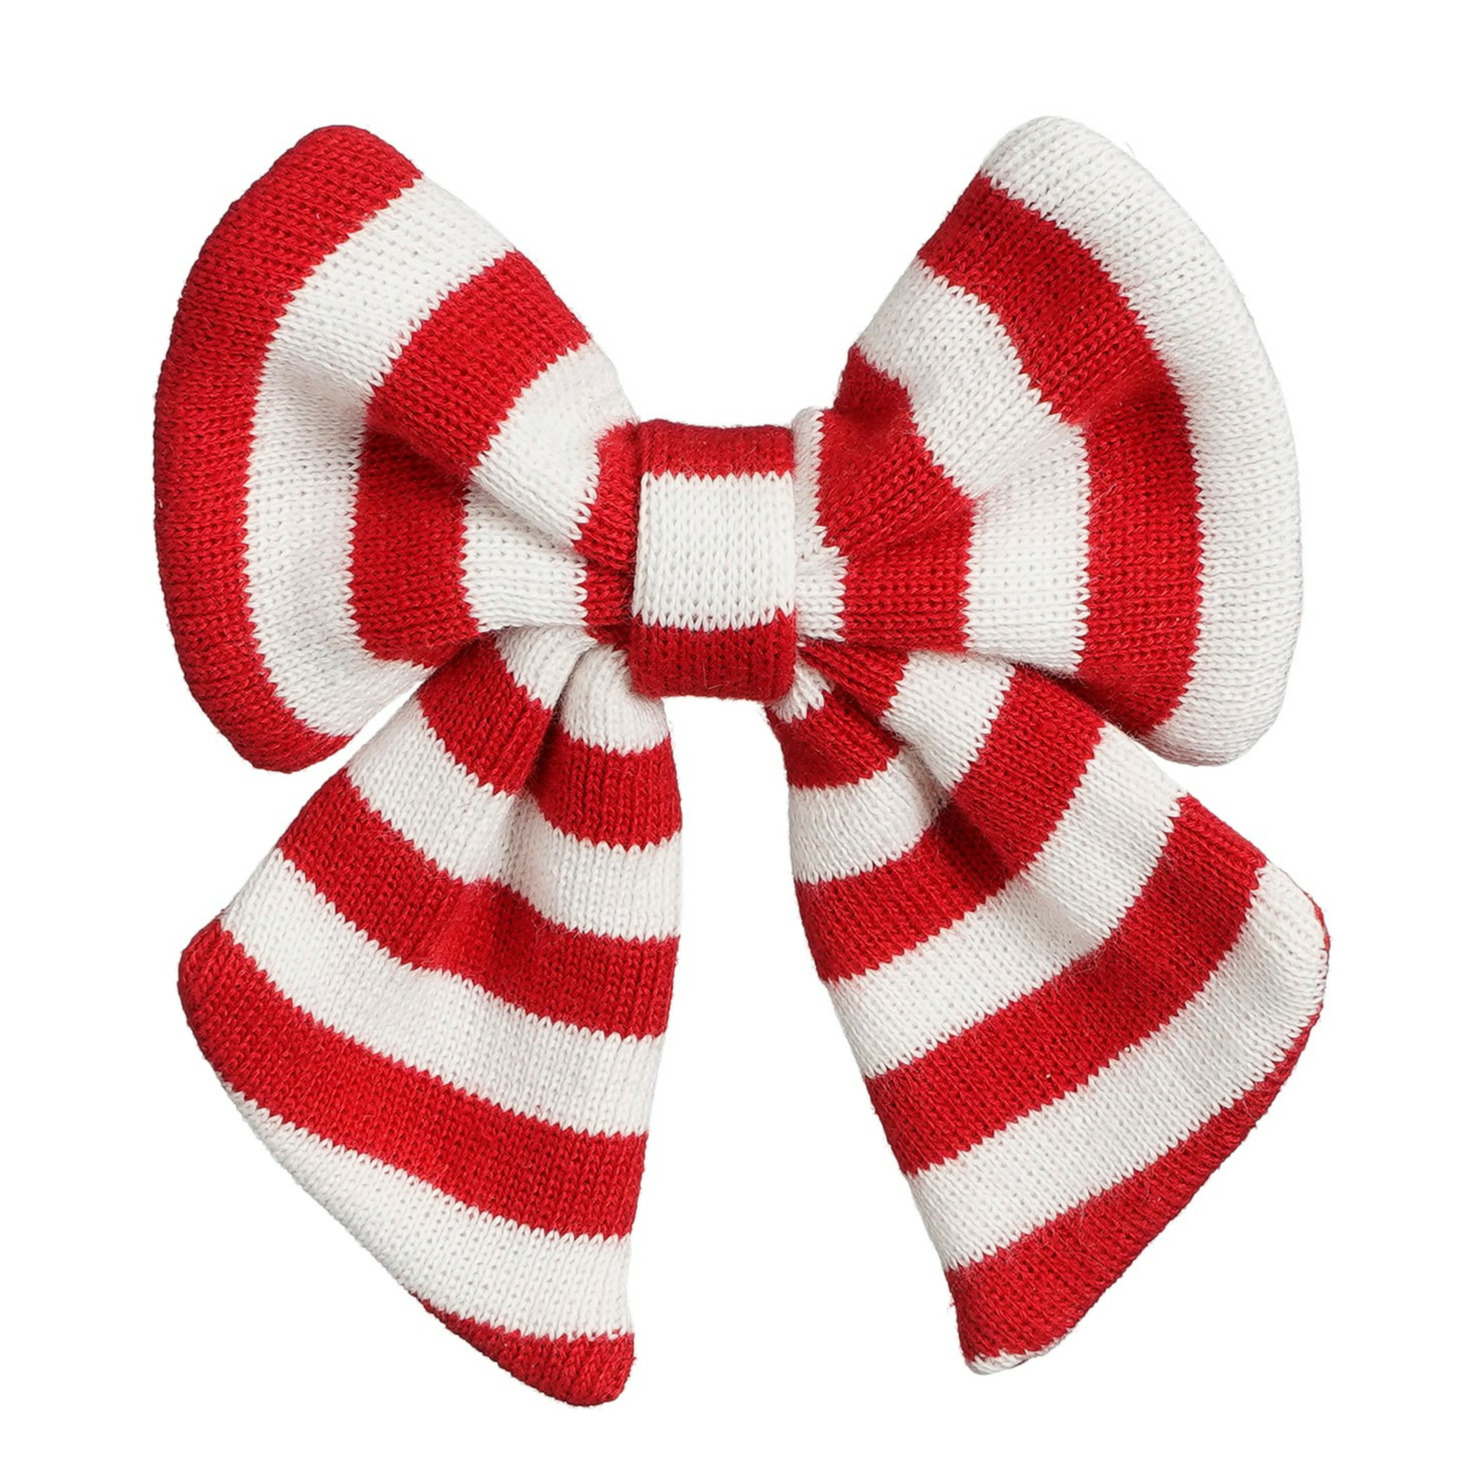 Kerst ornament strik -rood-wit streep 14 x 14 cm polyester